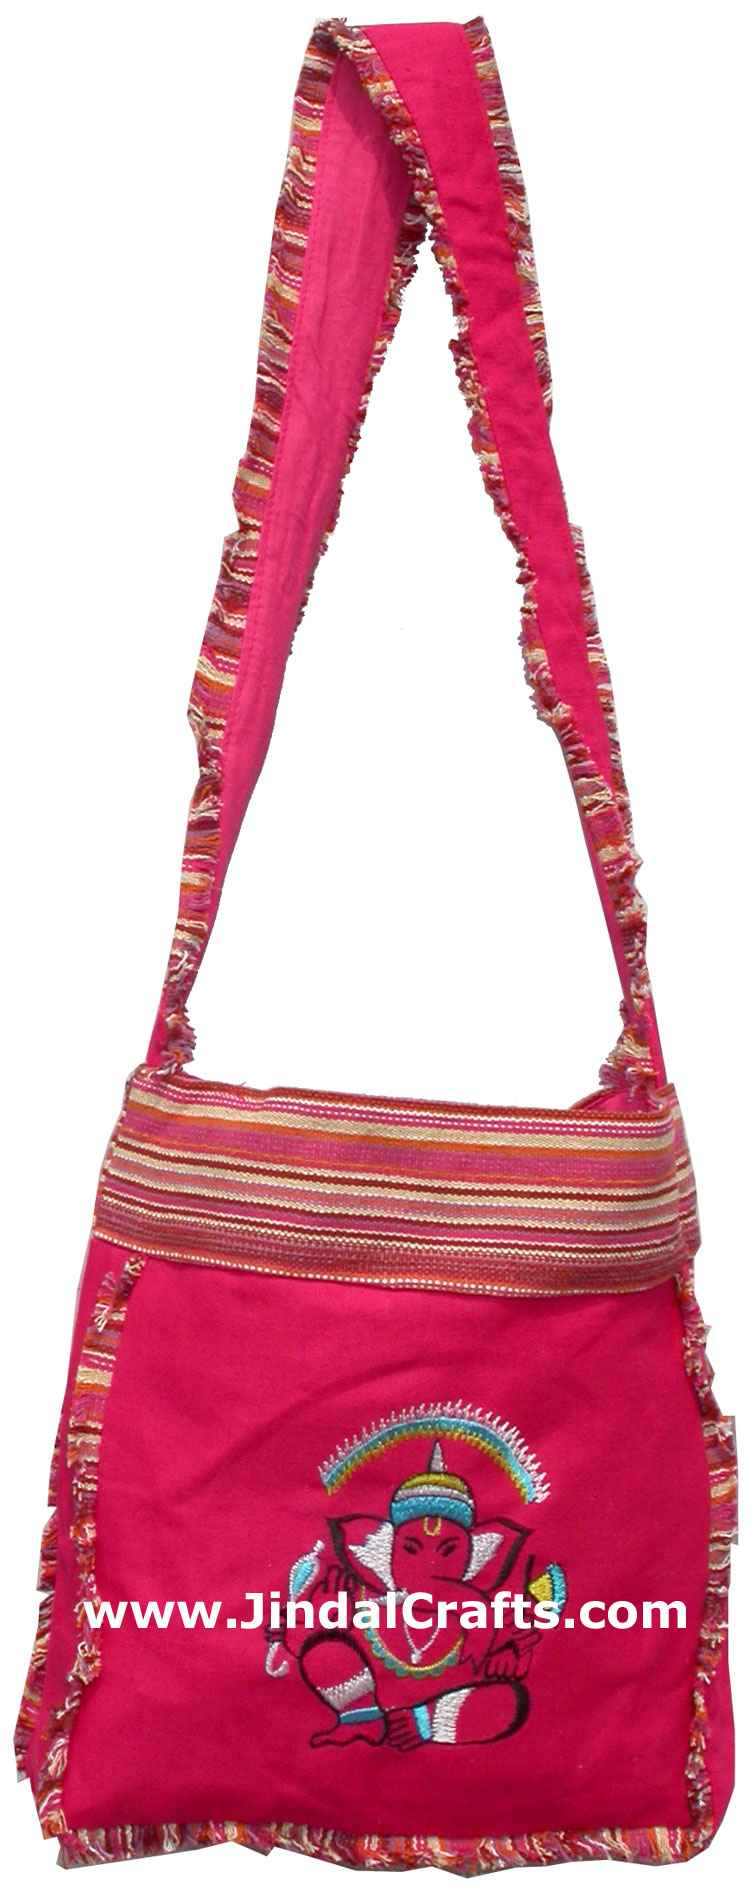 Colorful Hand Embroidered Handbag India Traditional Art